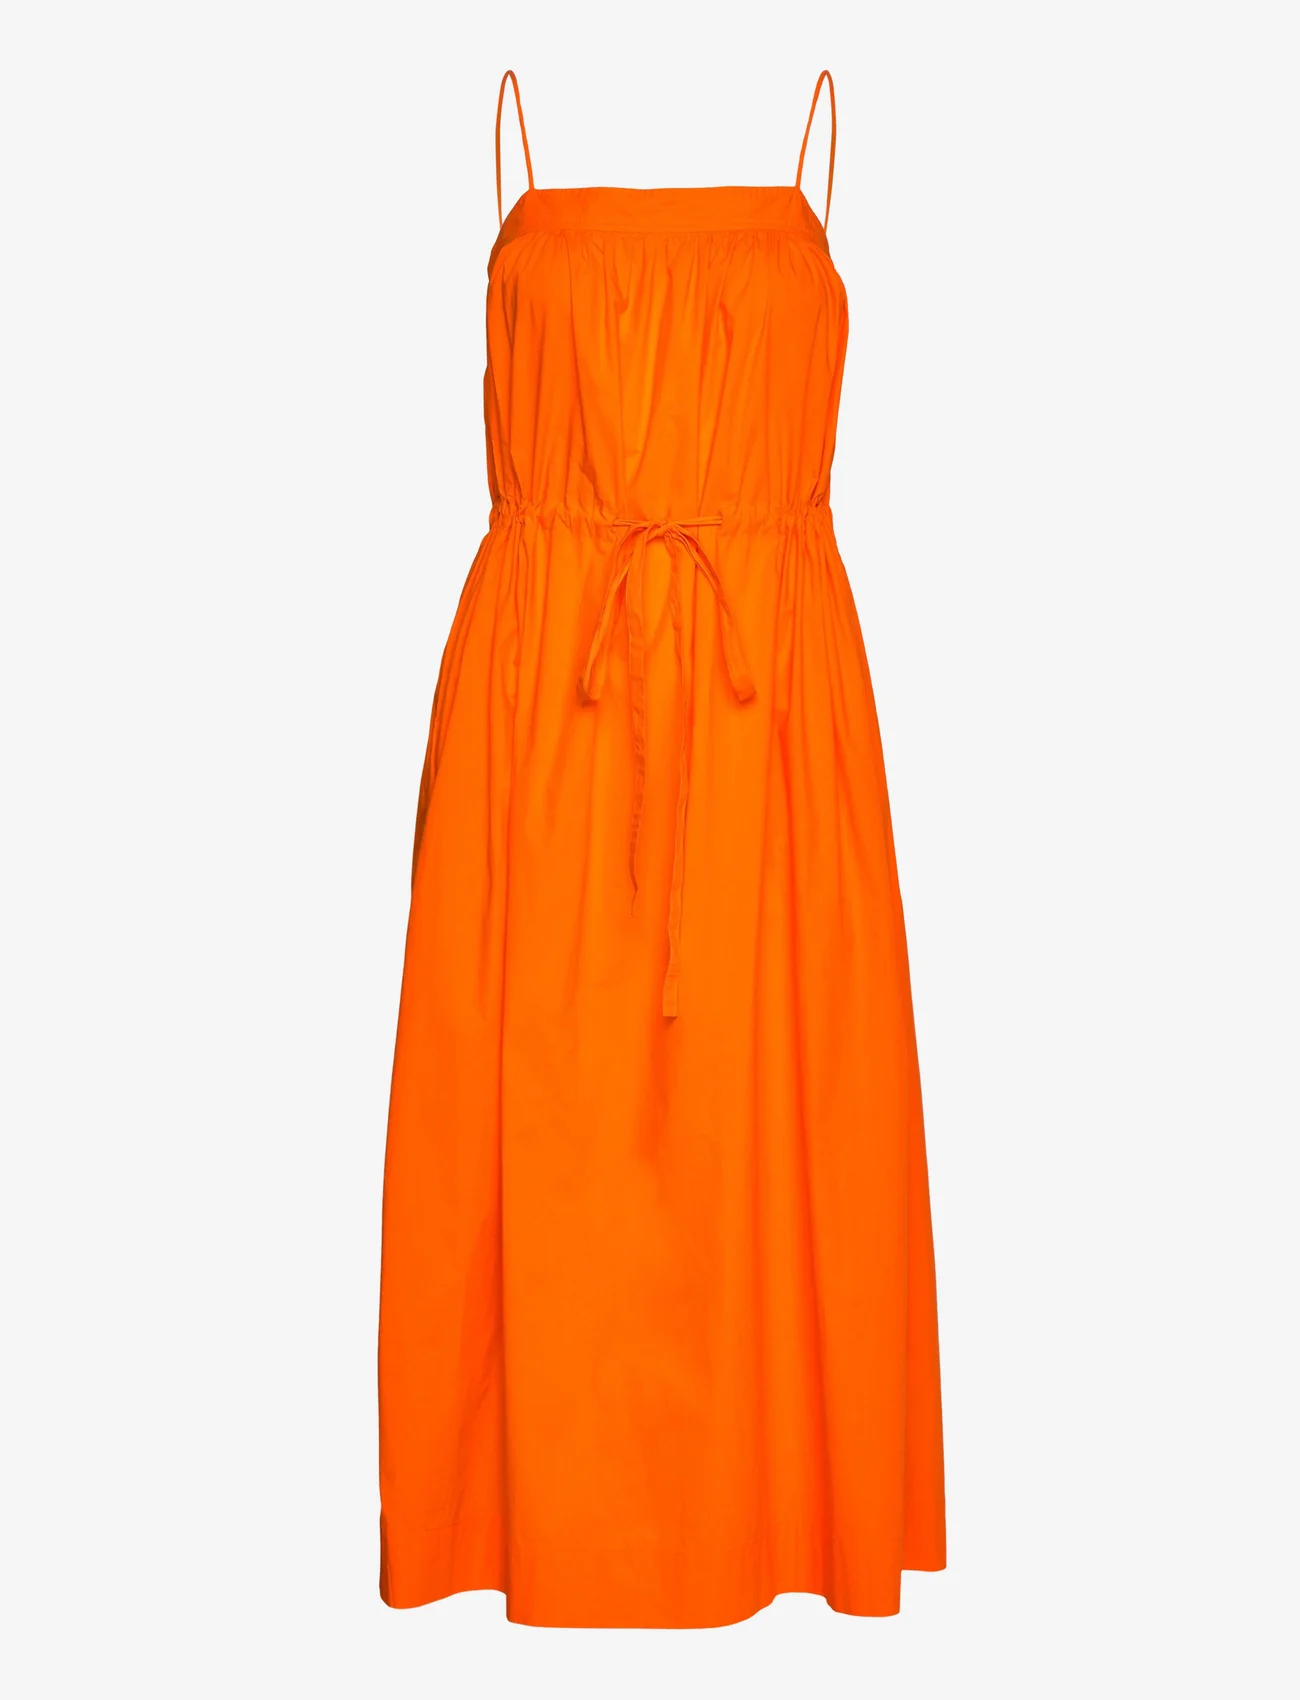 Ganni - Cotton Poplin - maxi dresses - vibrant orange - 0